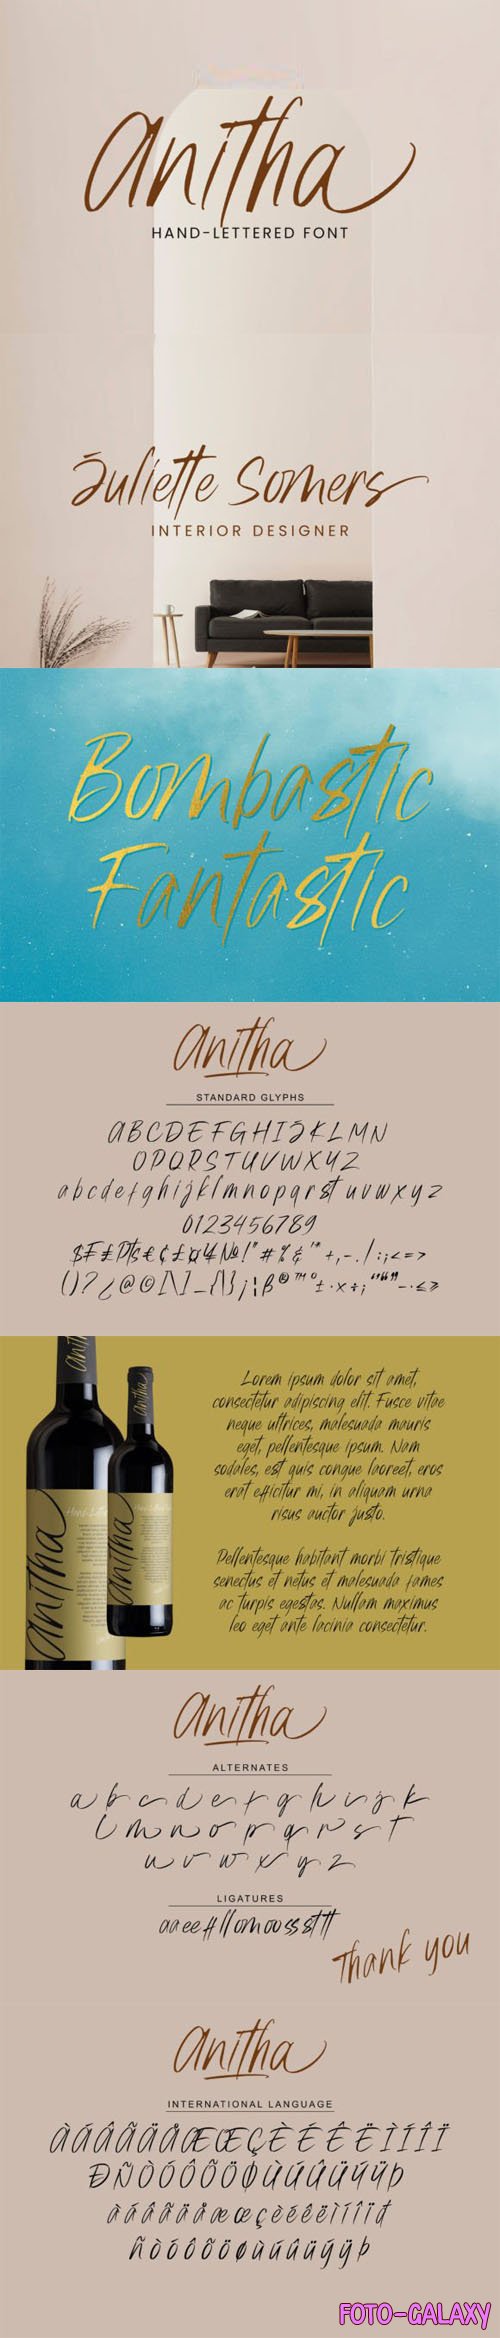 Anitha Hand-lettered Font